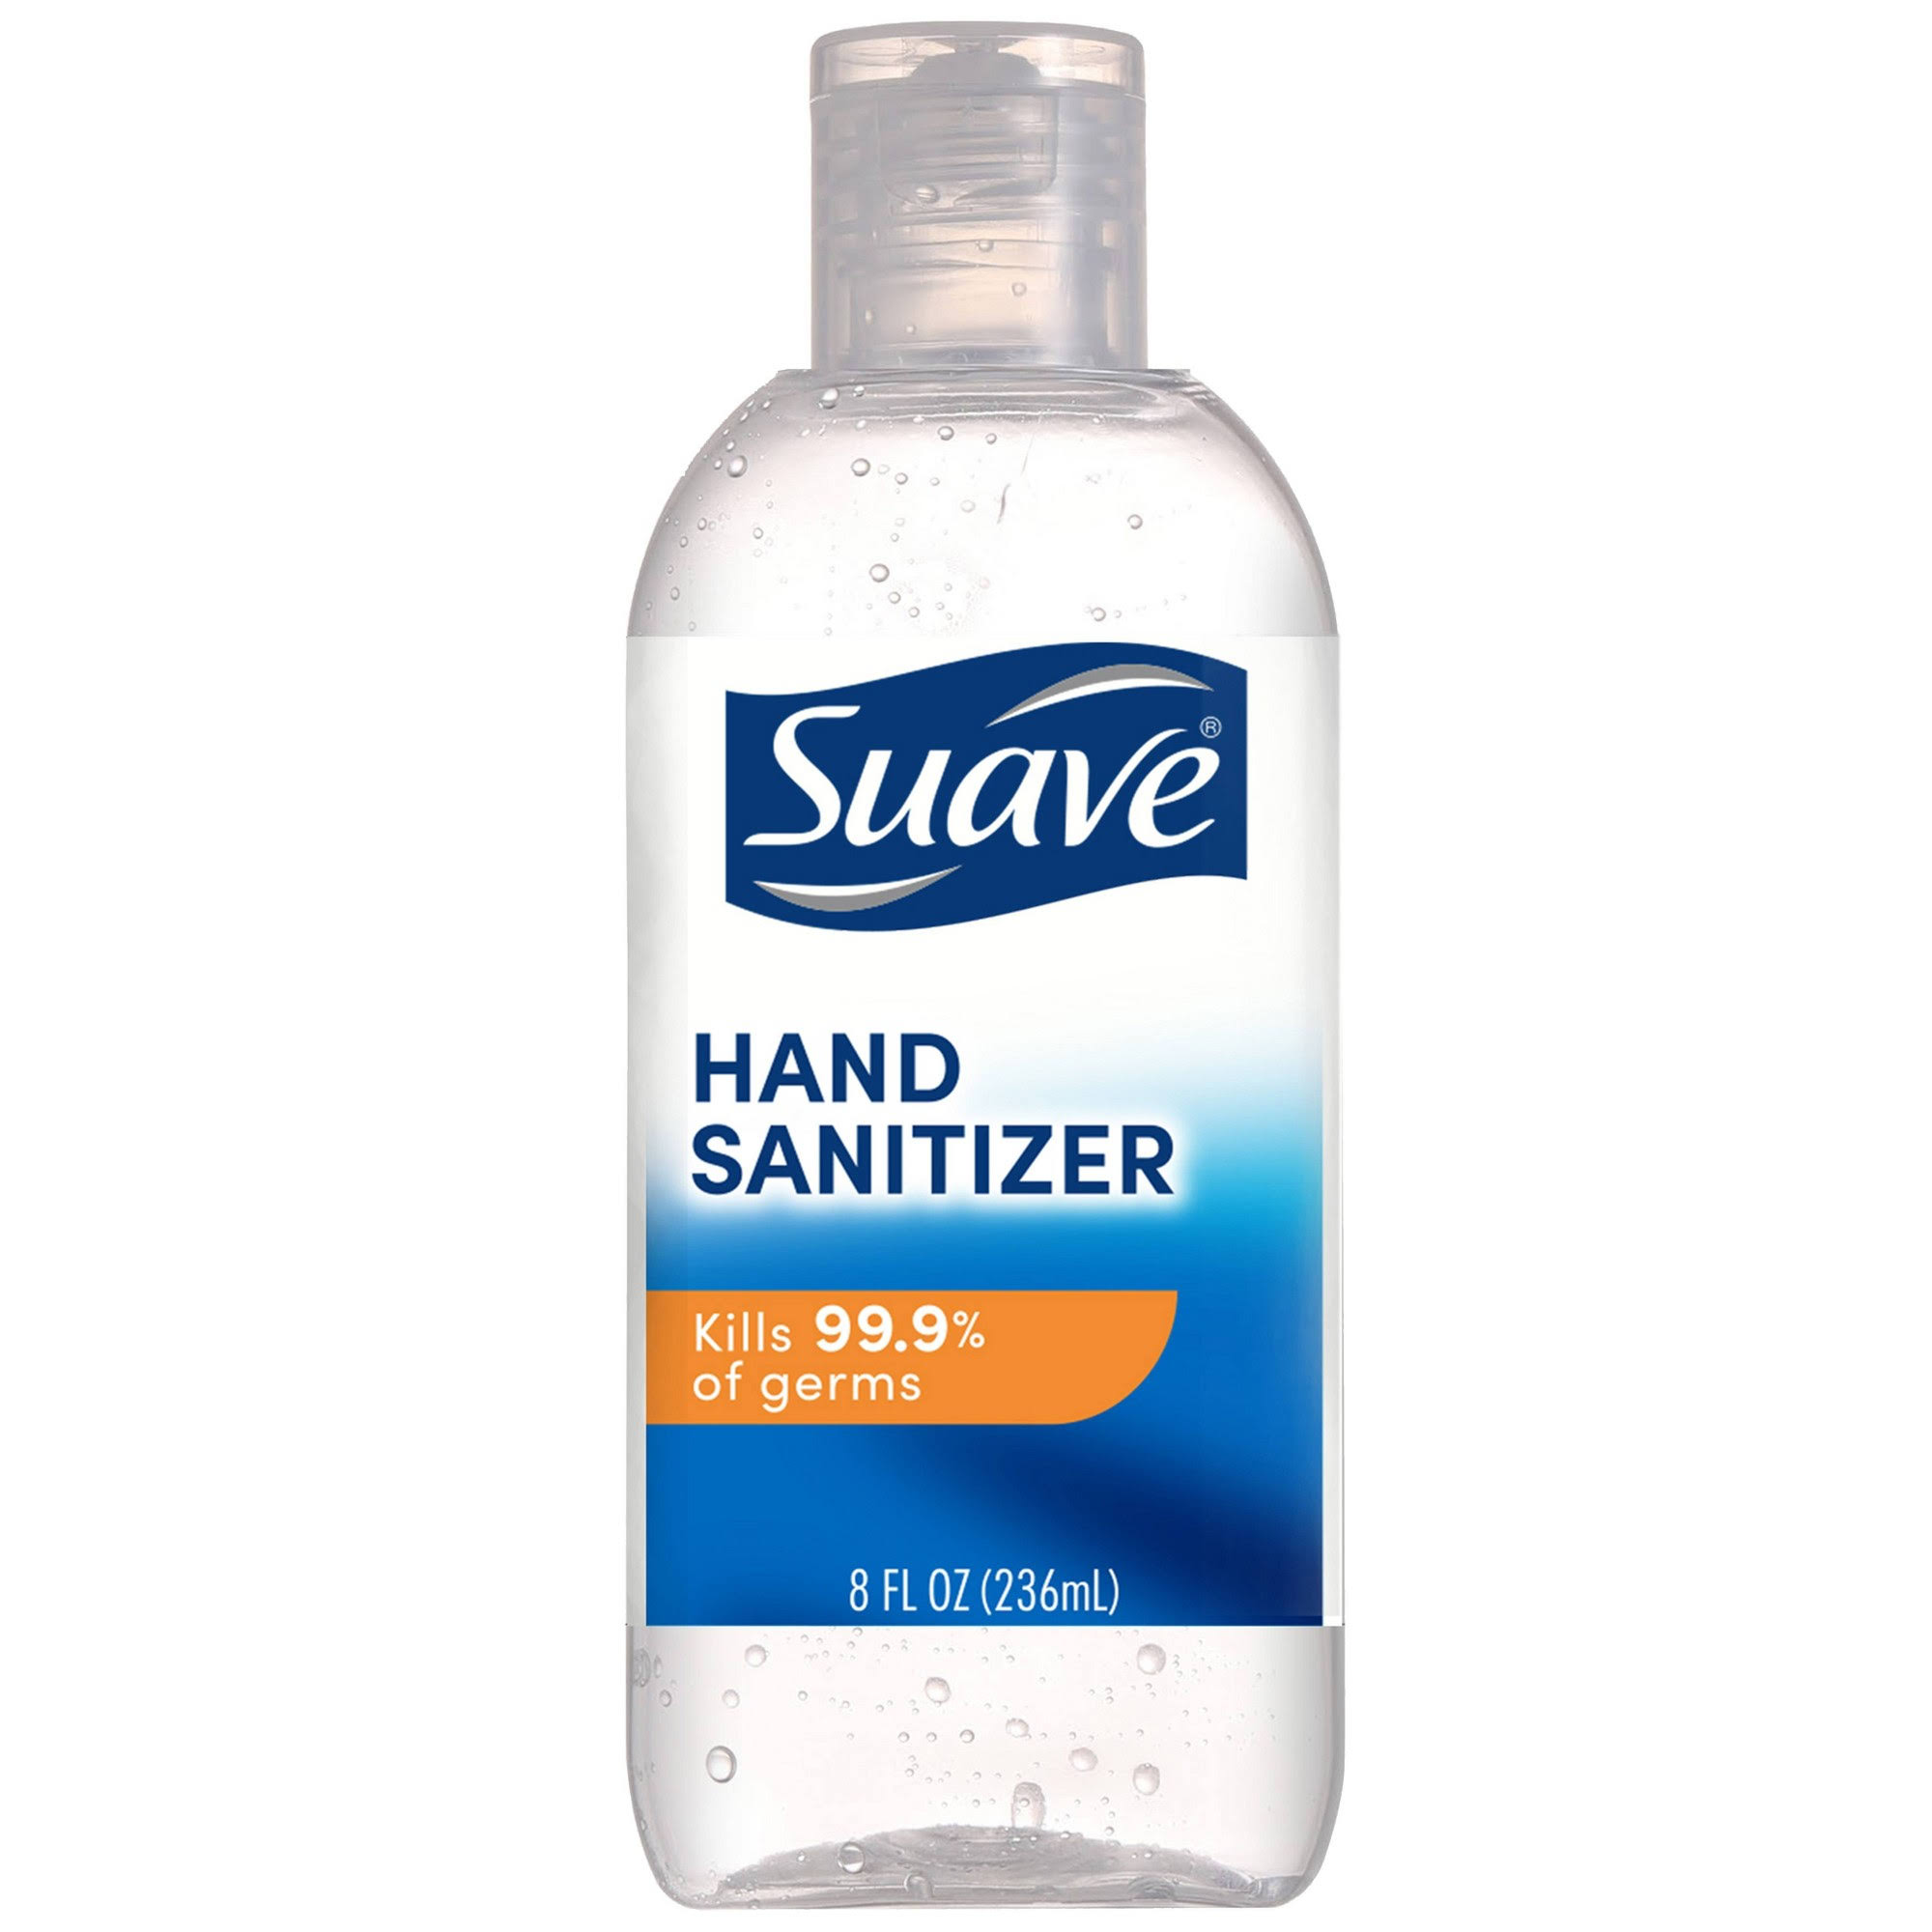 Suave Hand Sanitizer - 8 fl oz